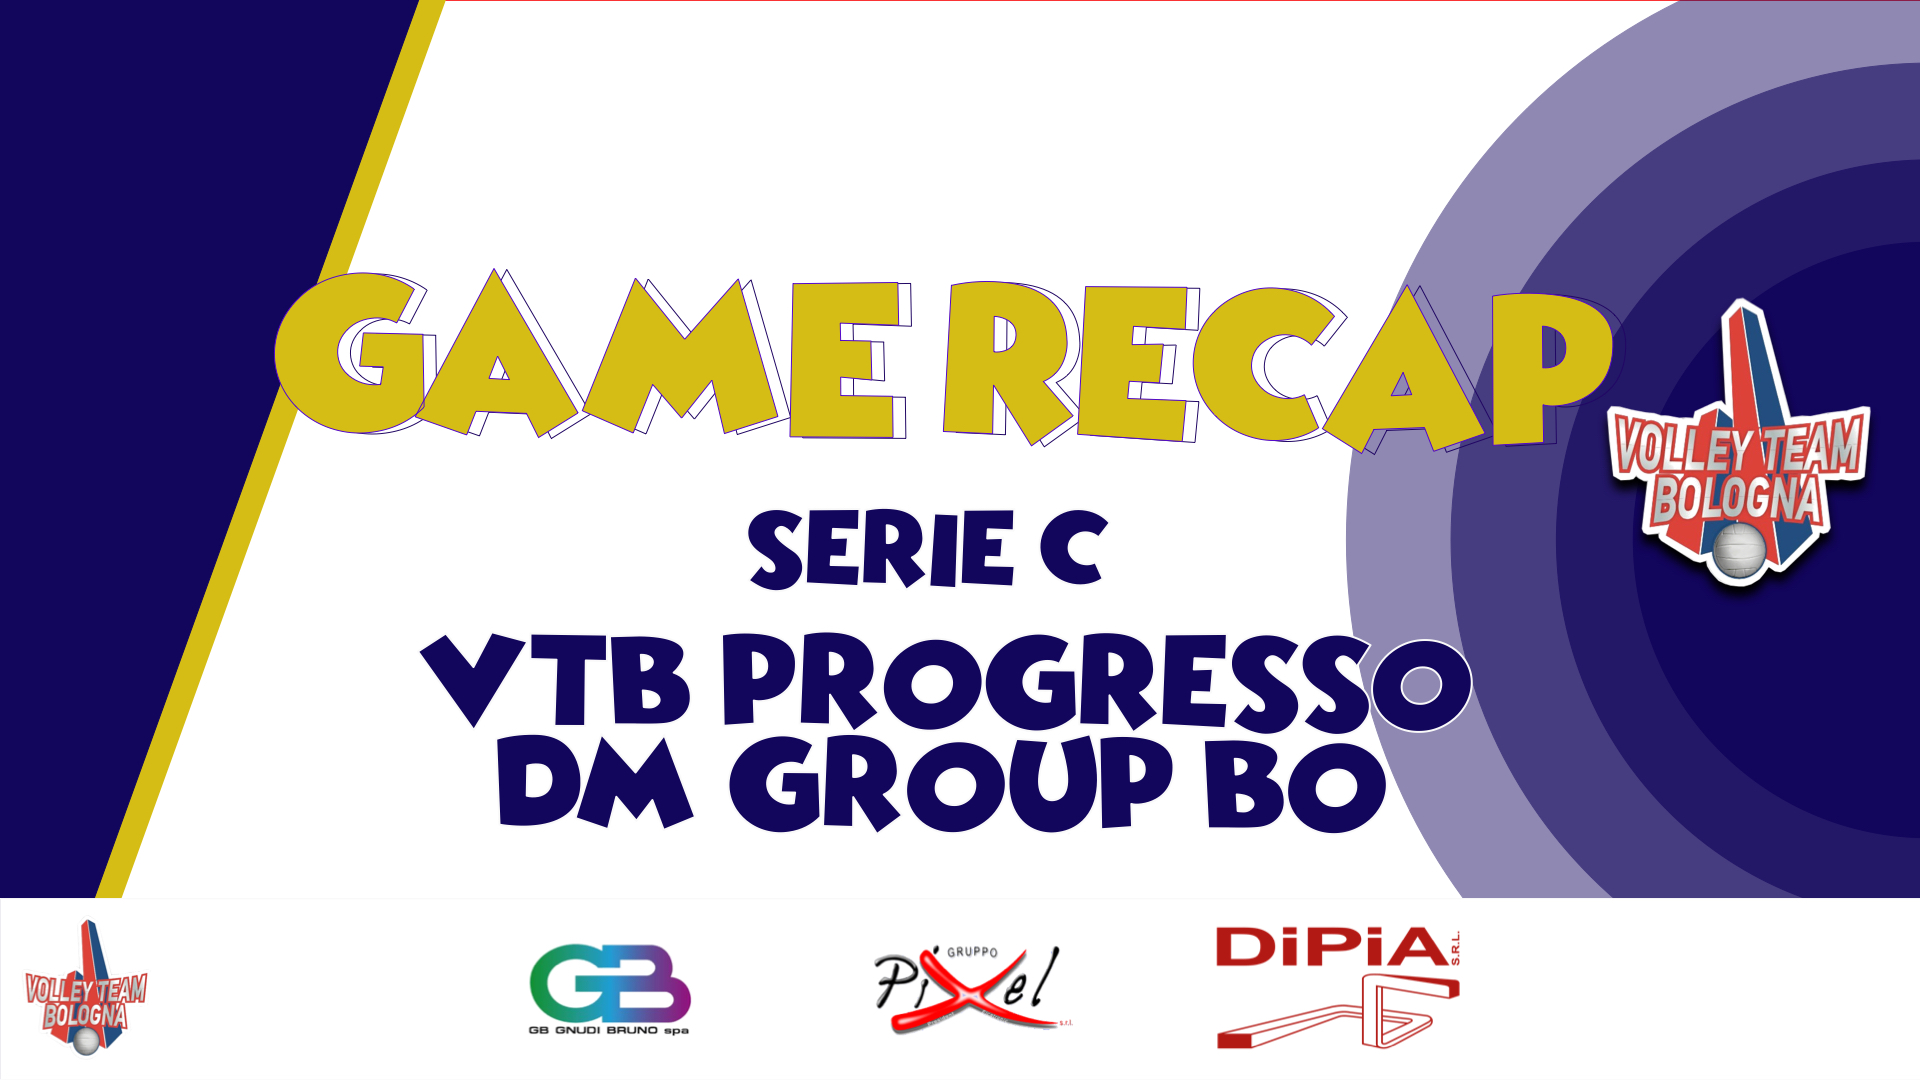 GAME RECAP SERIE C DM GROUP – PROGRESSO VTB EUROTEC